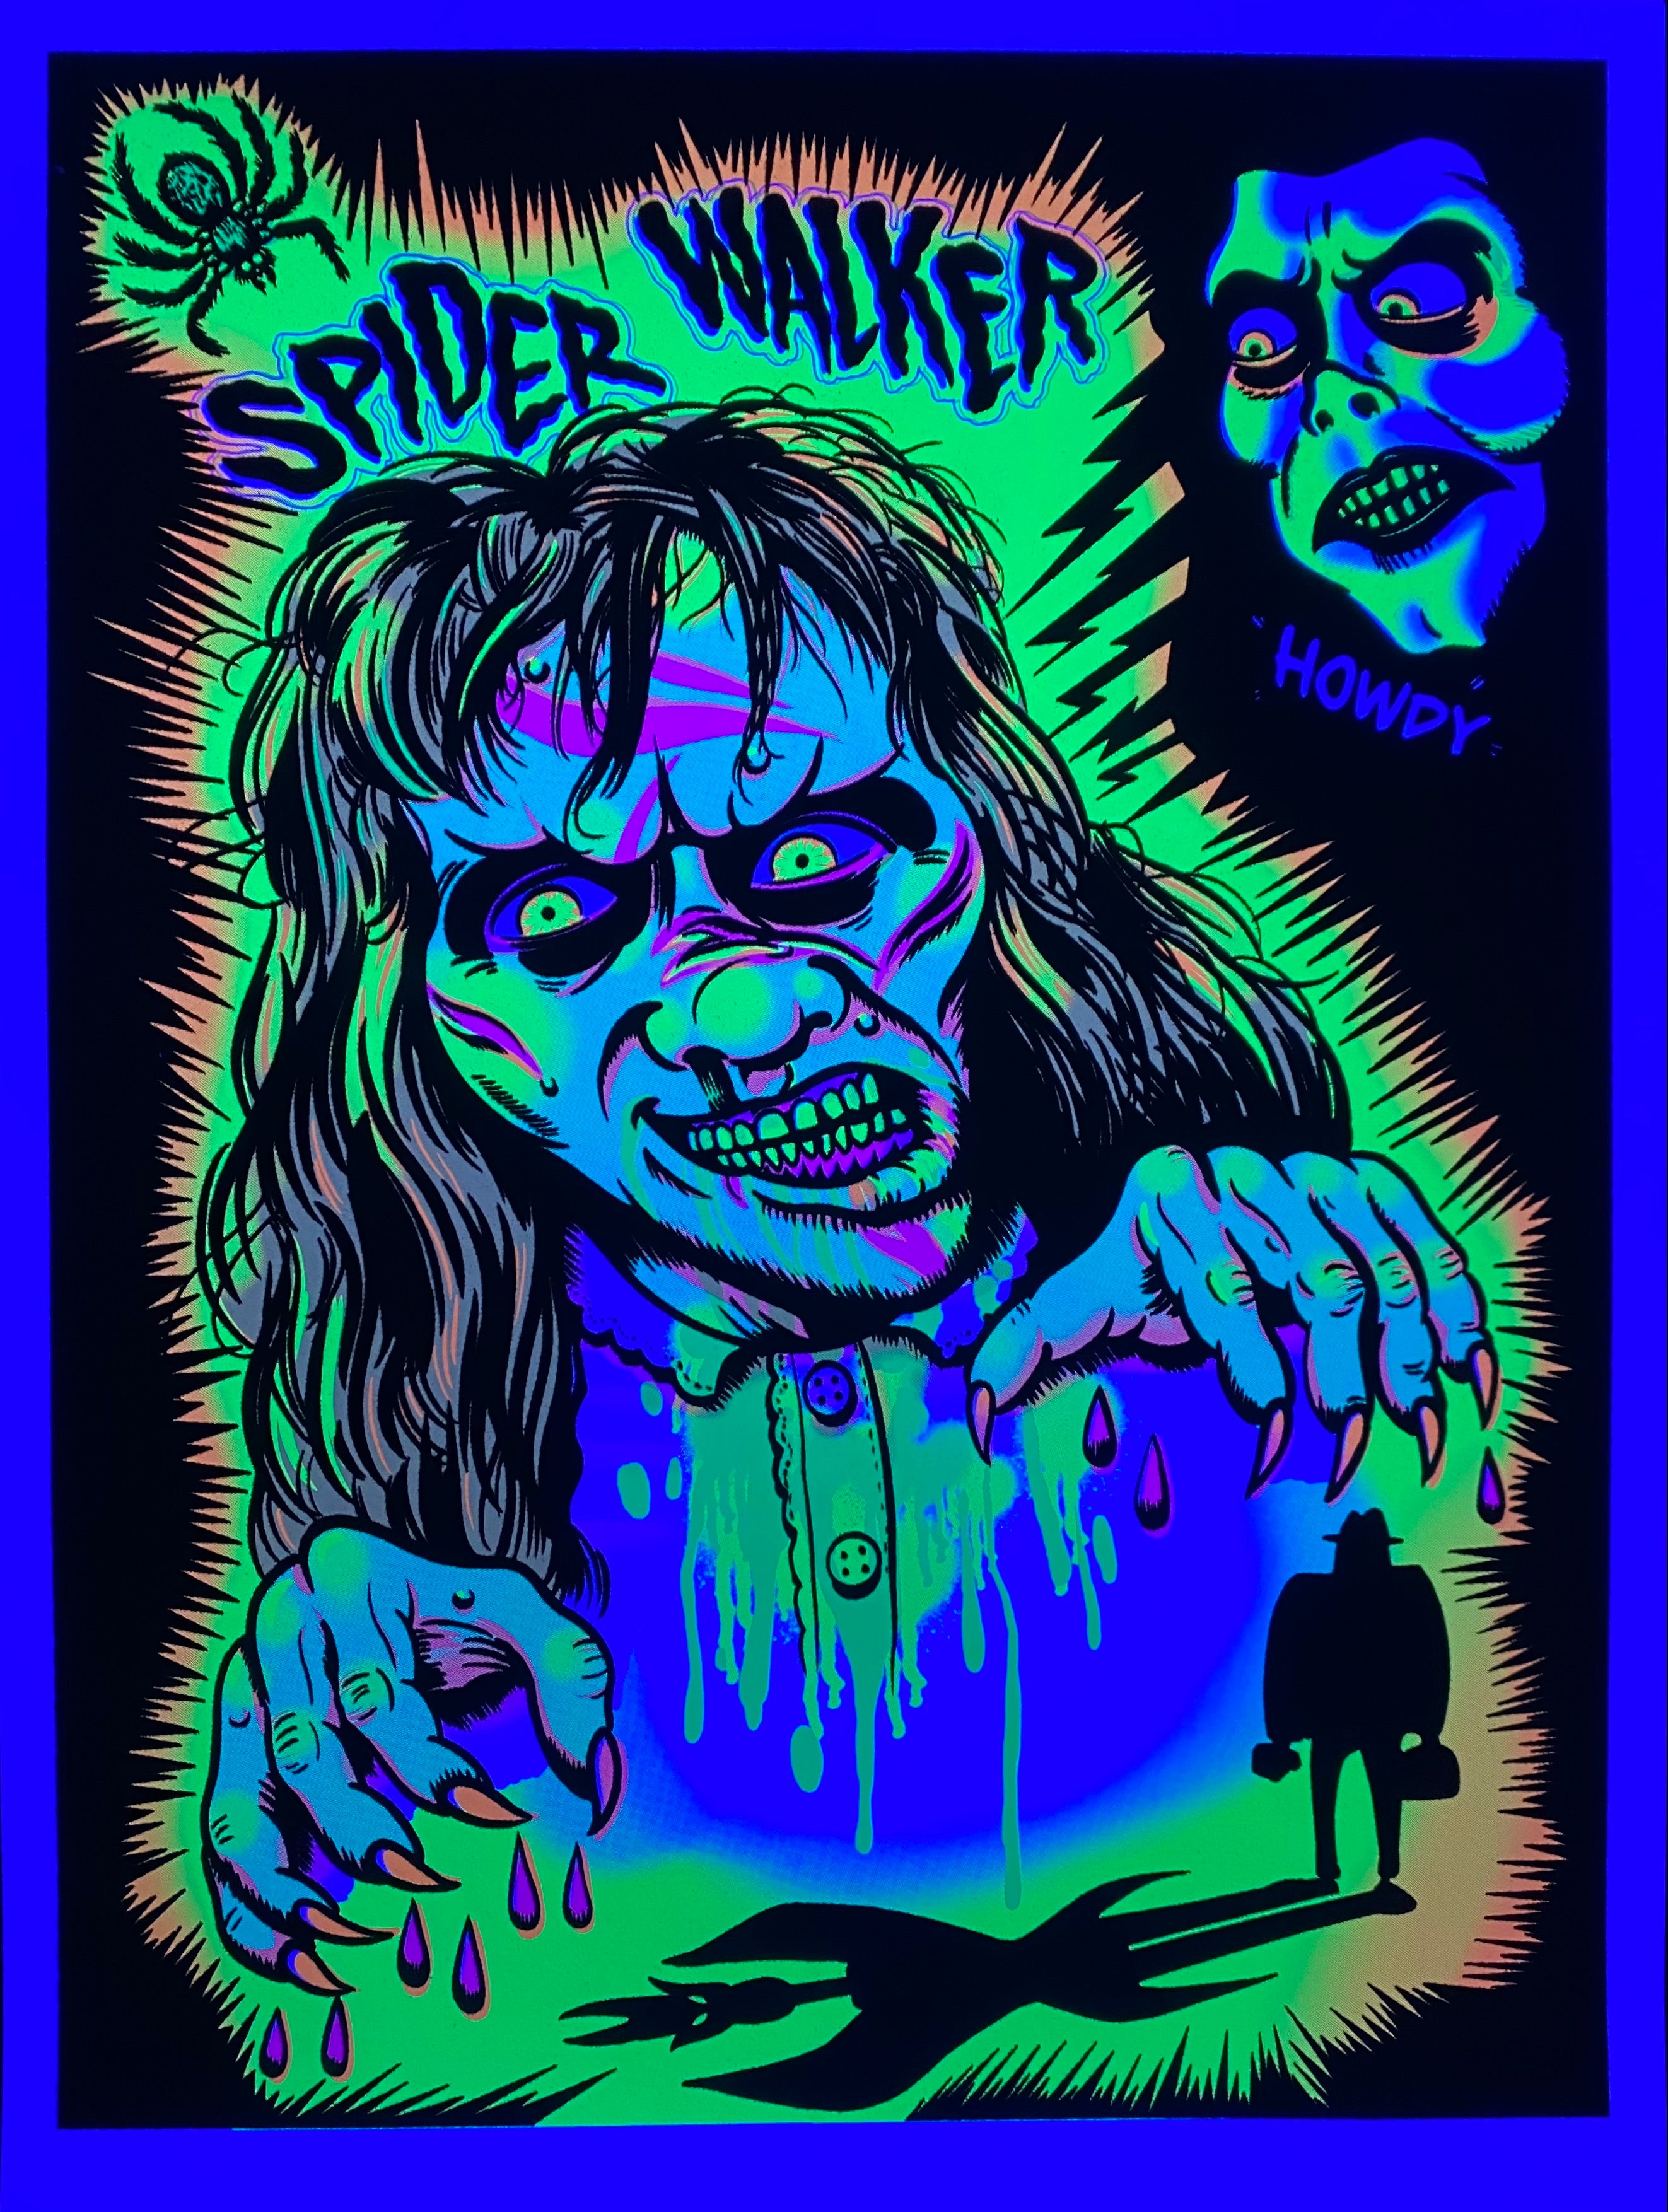 "Spider Walker" Blacklight Parody Print